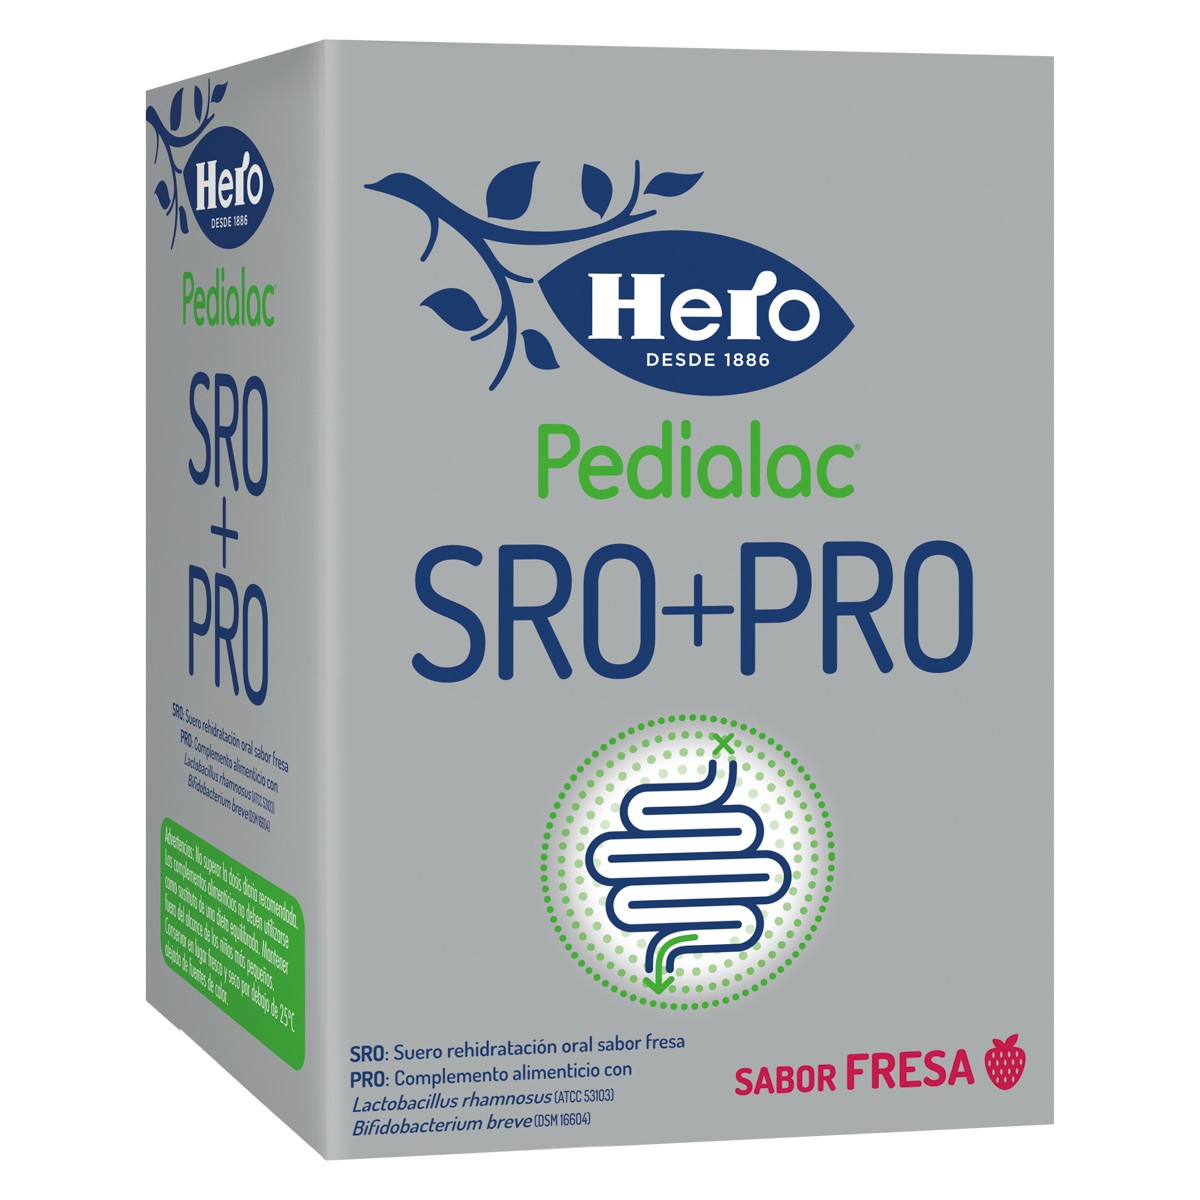 Hero pedialac sro+pro fresa 3 x 200ml